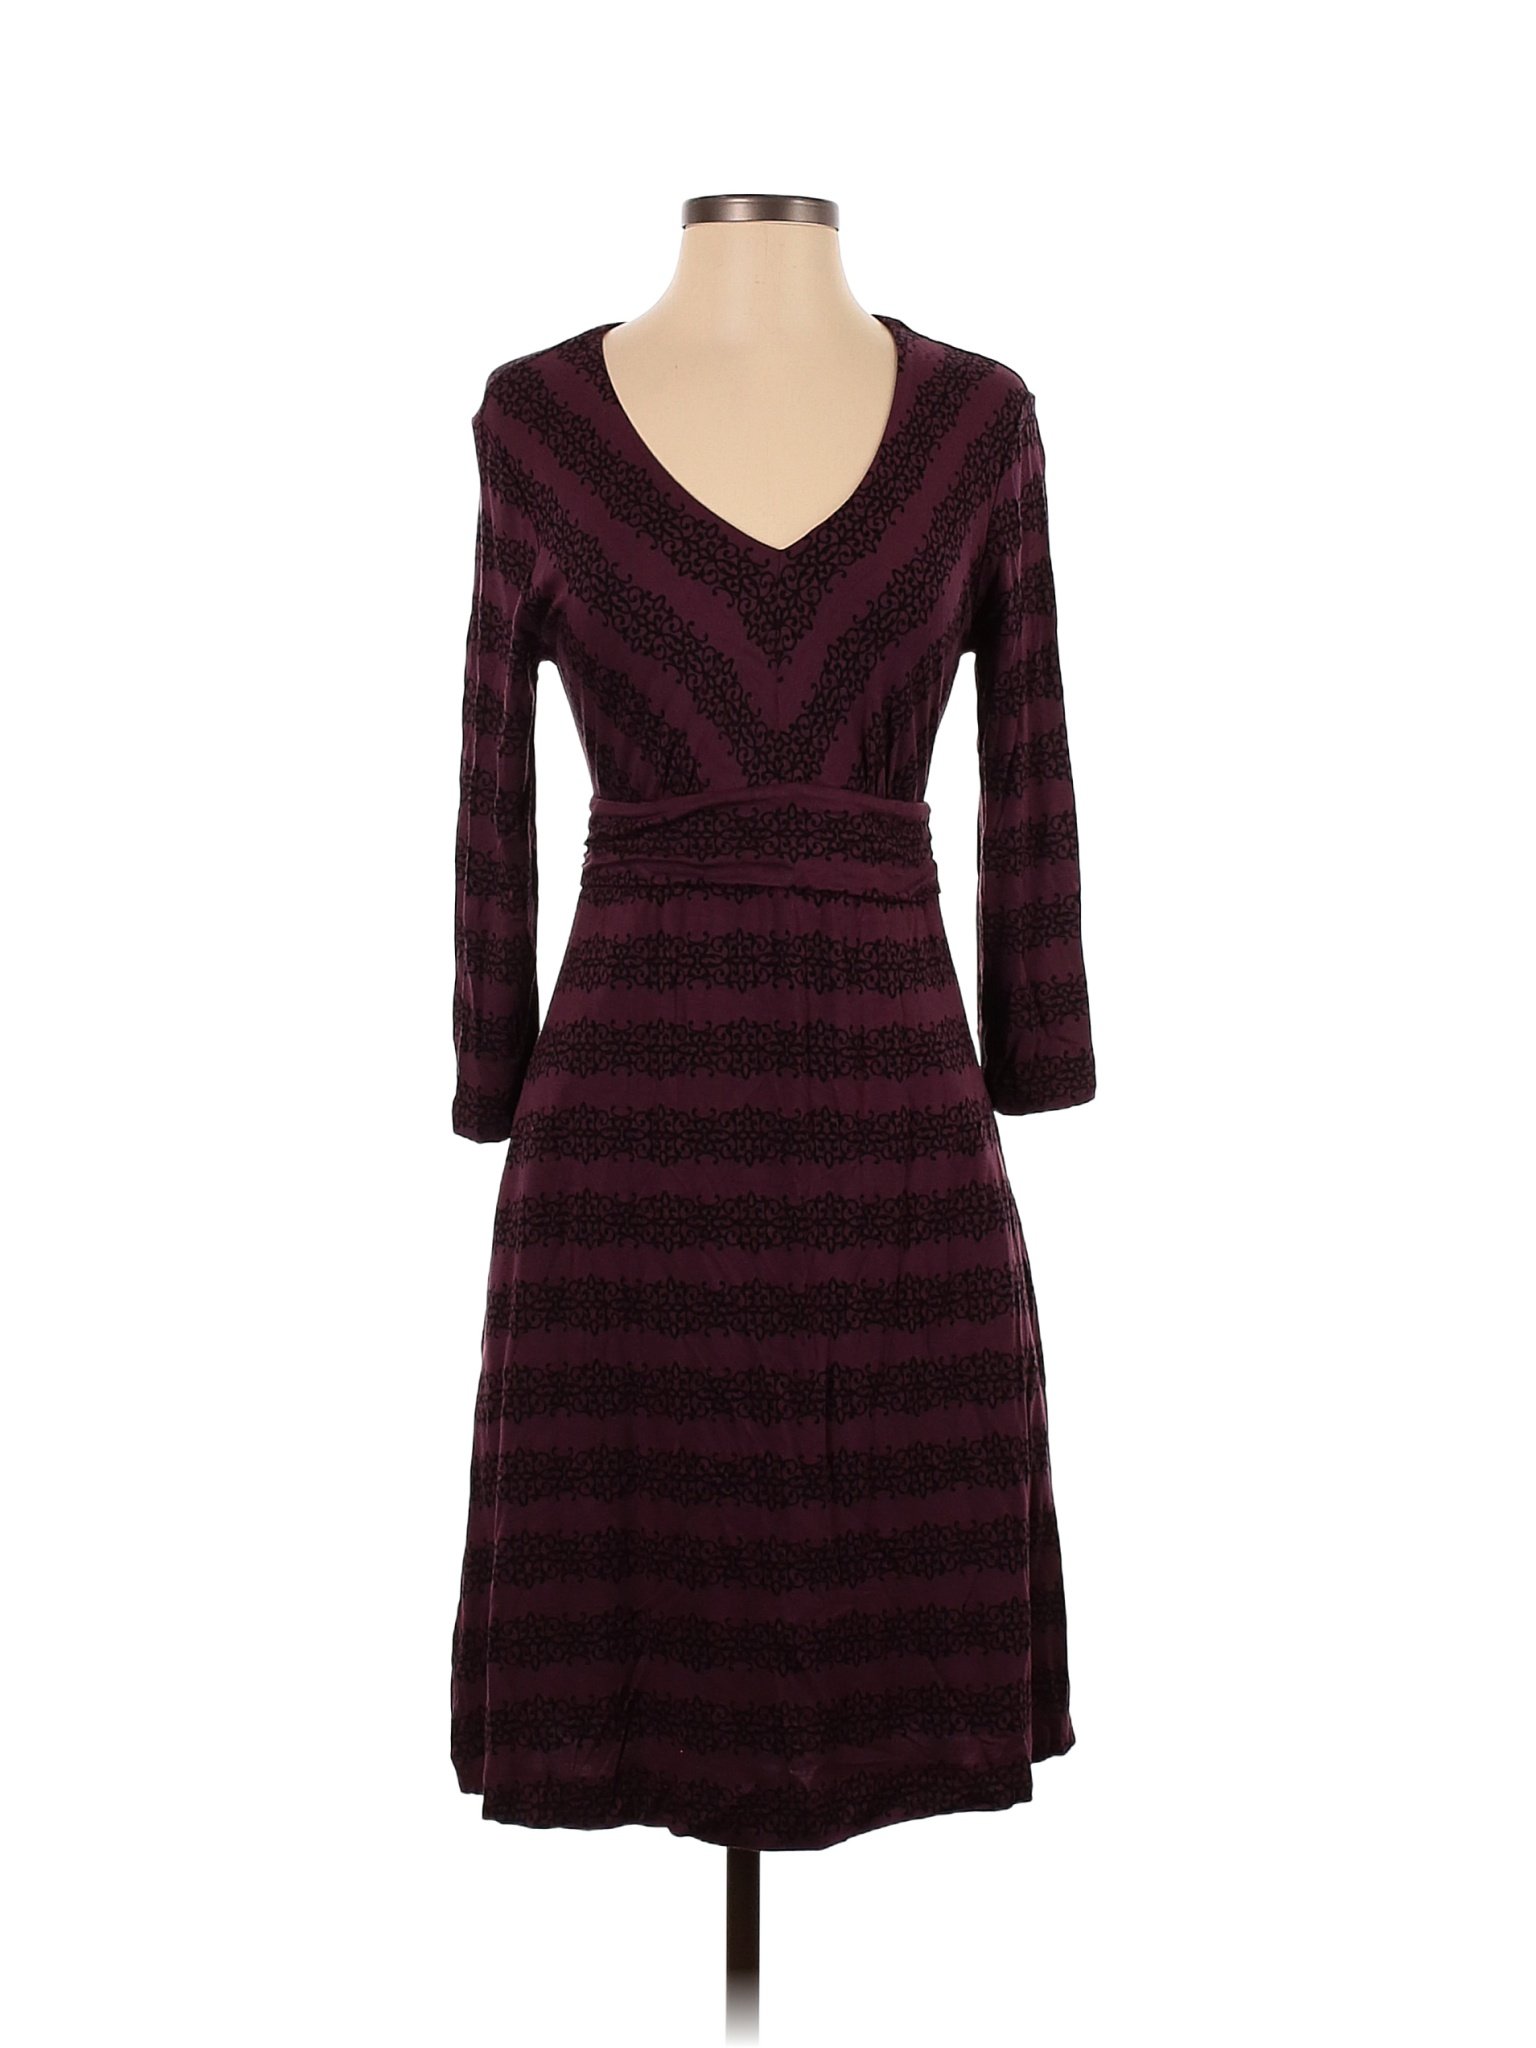 Soma Multi Color Purple Casual Dress Size XS - 82% off